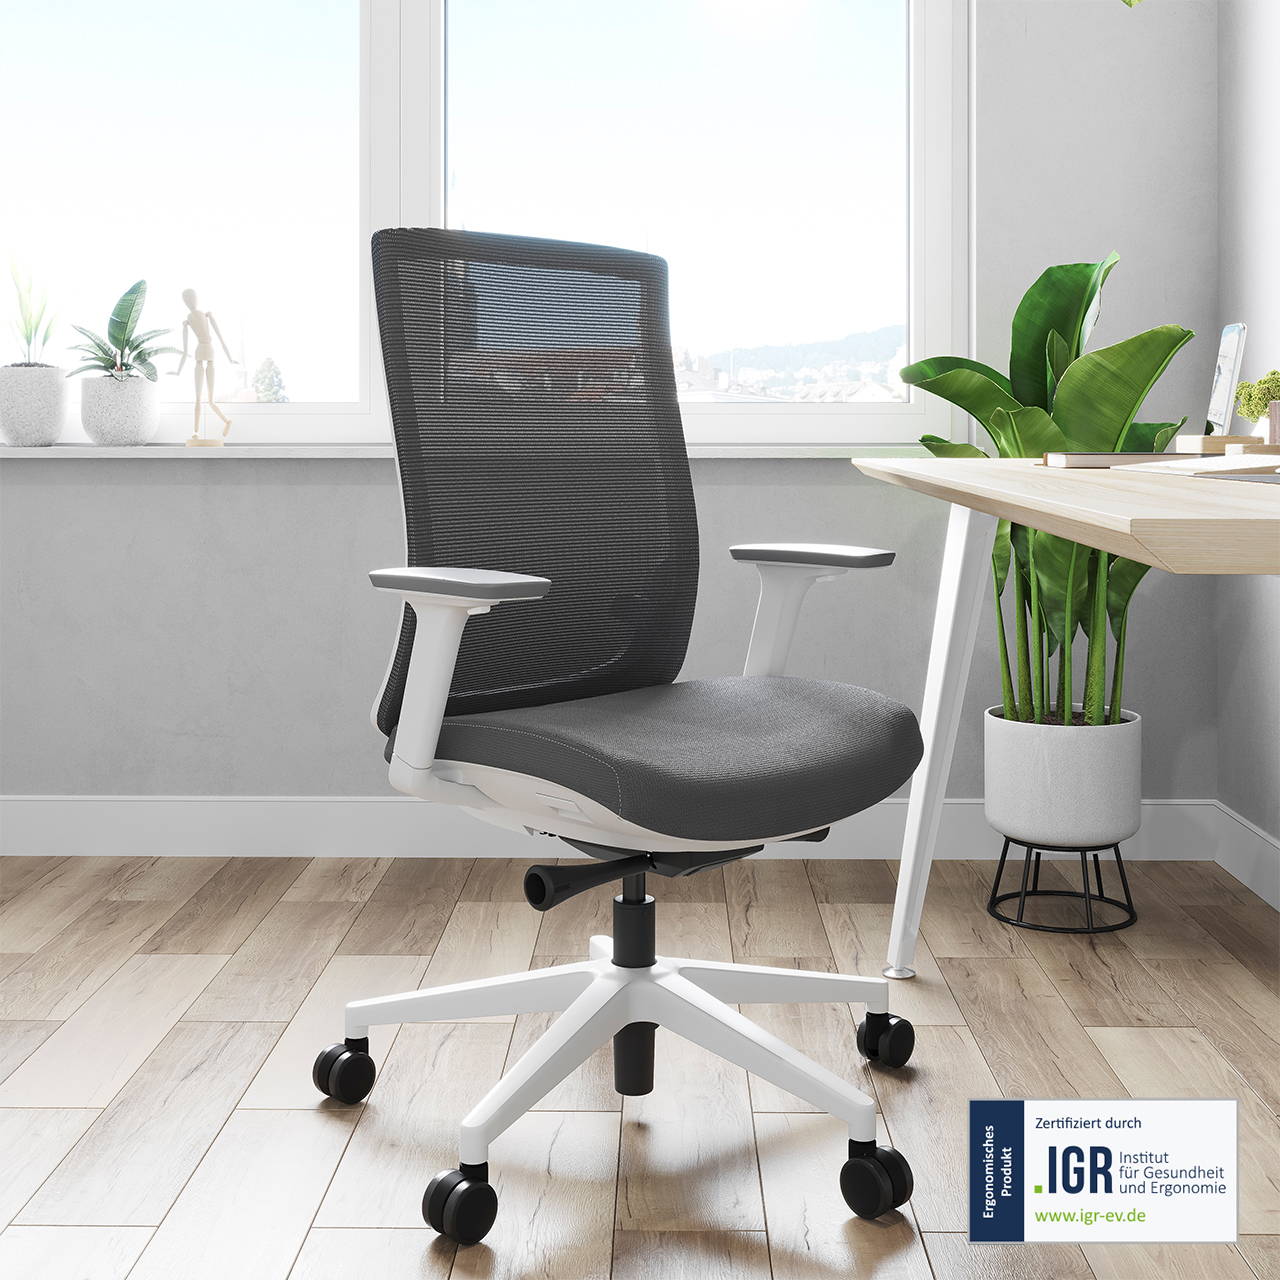 The ergonomic office chair Ergo